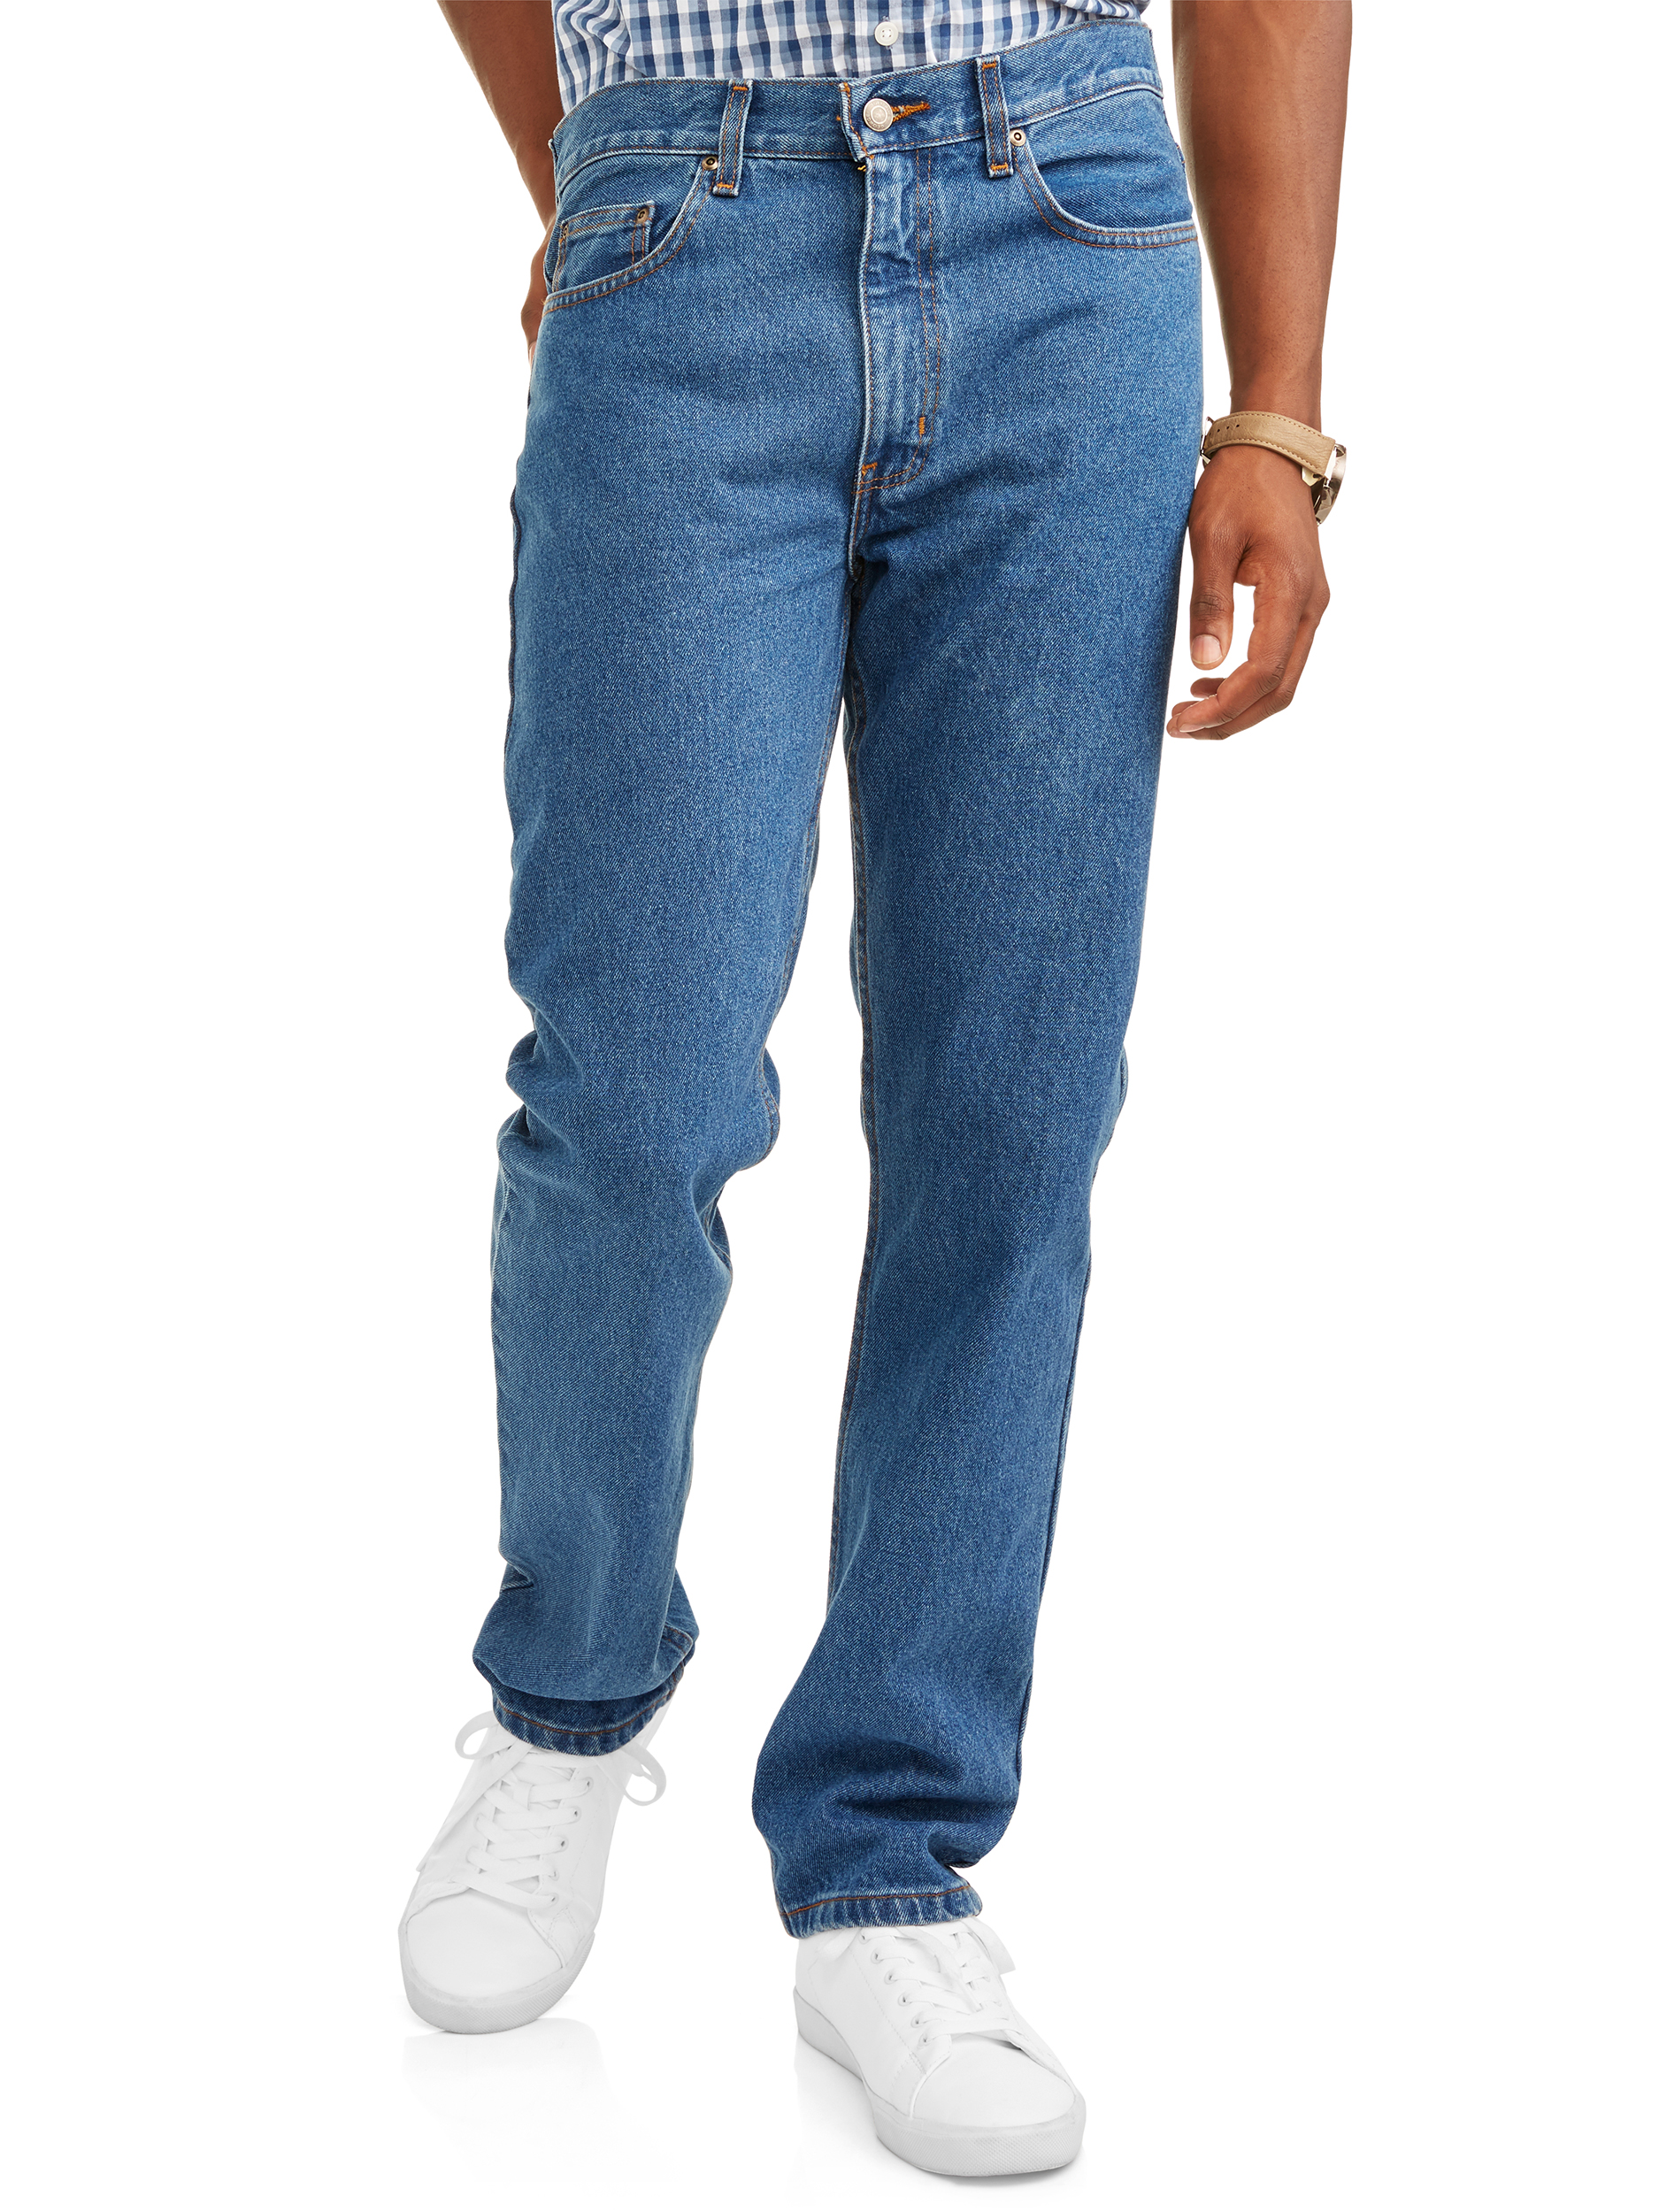 George Men's and Big Men's 100% Cotton Regular Fit Jeans - image 6 of 9